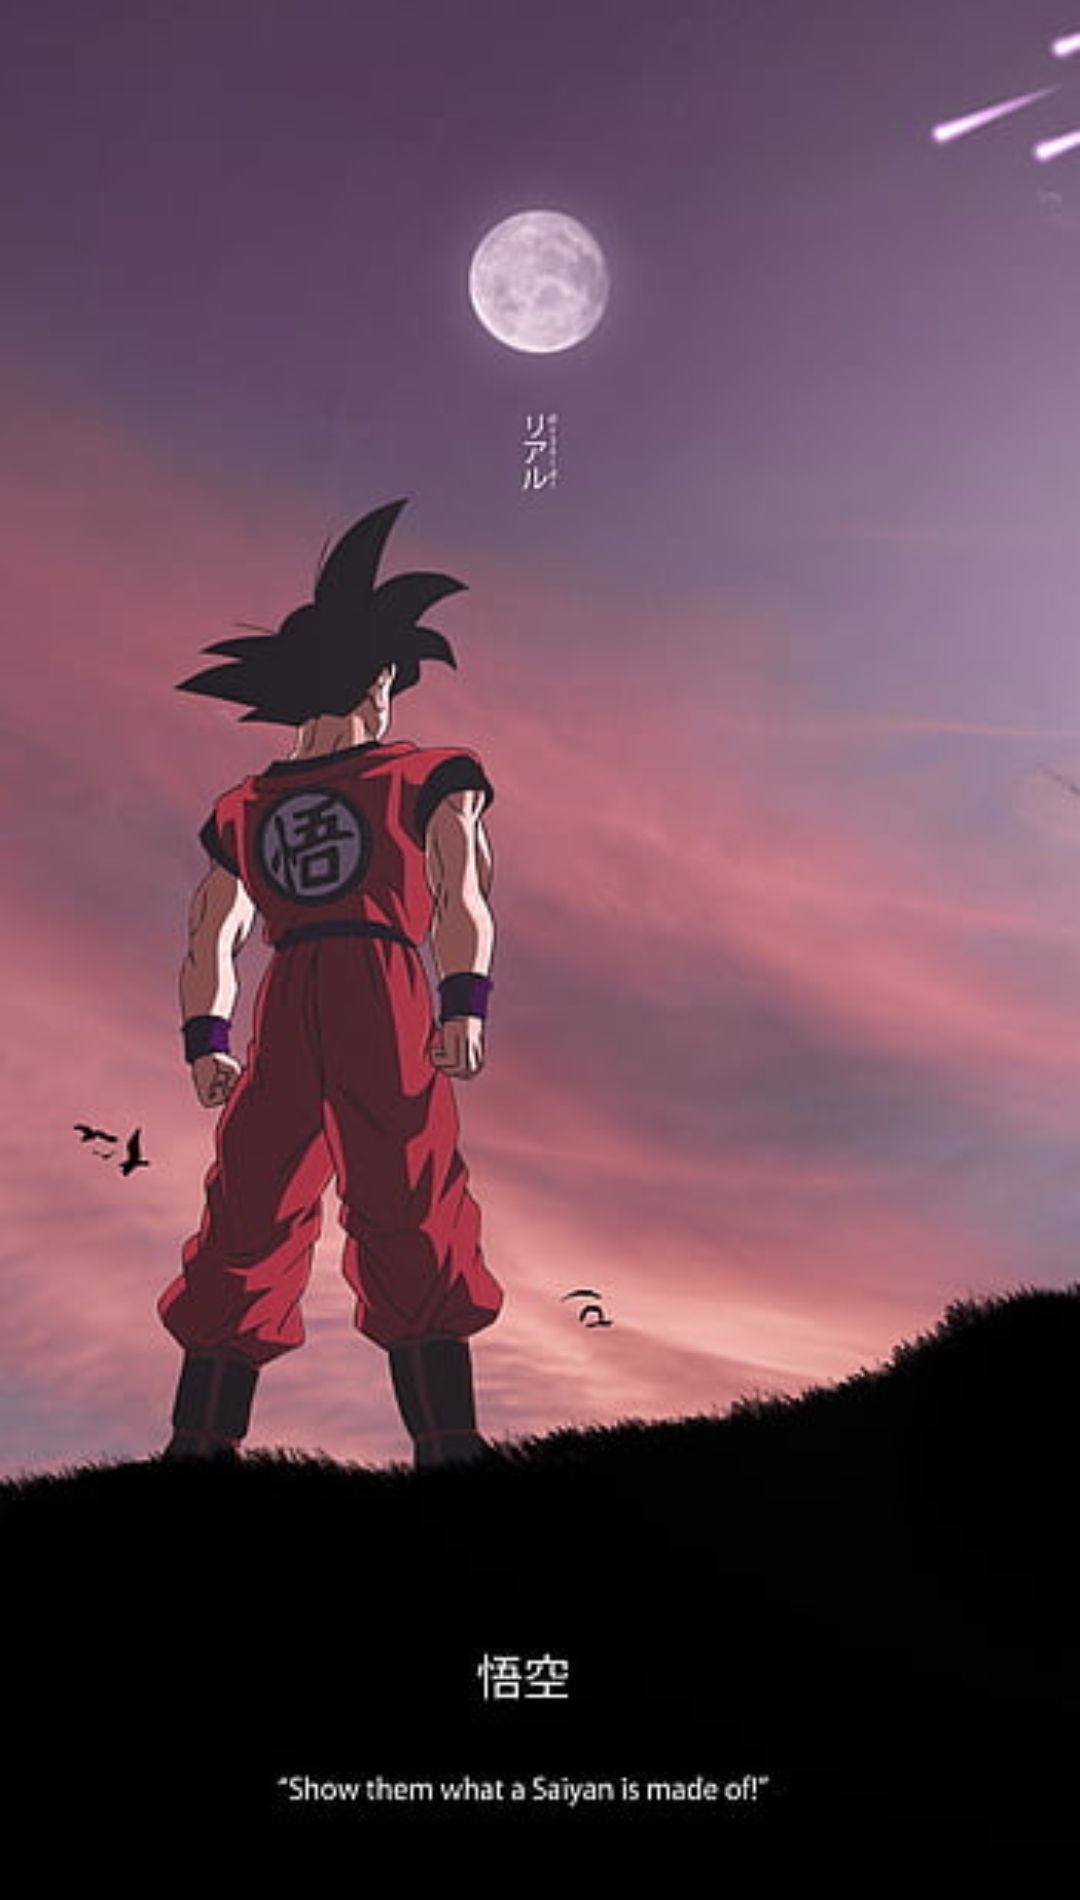 Goku in the moonlight - Goku